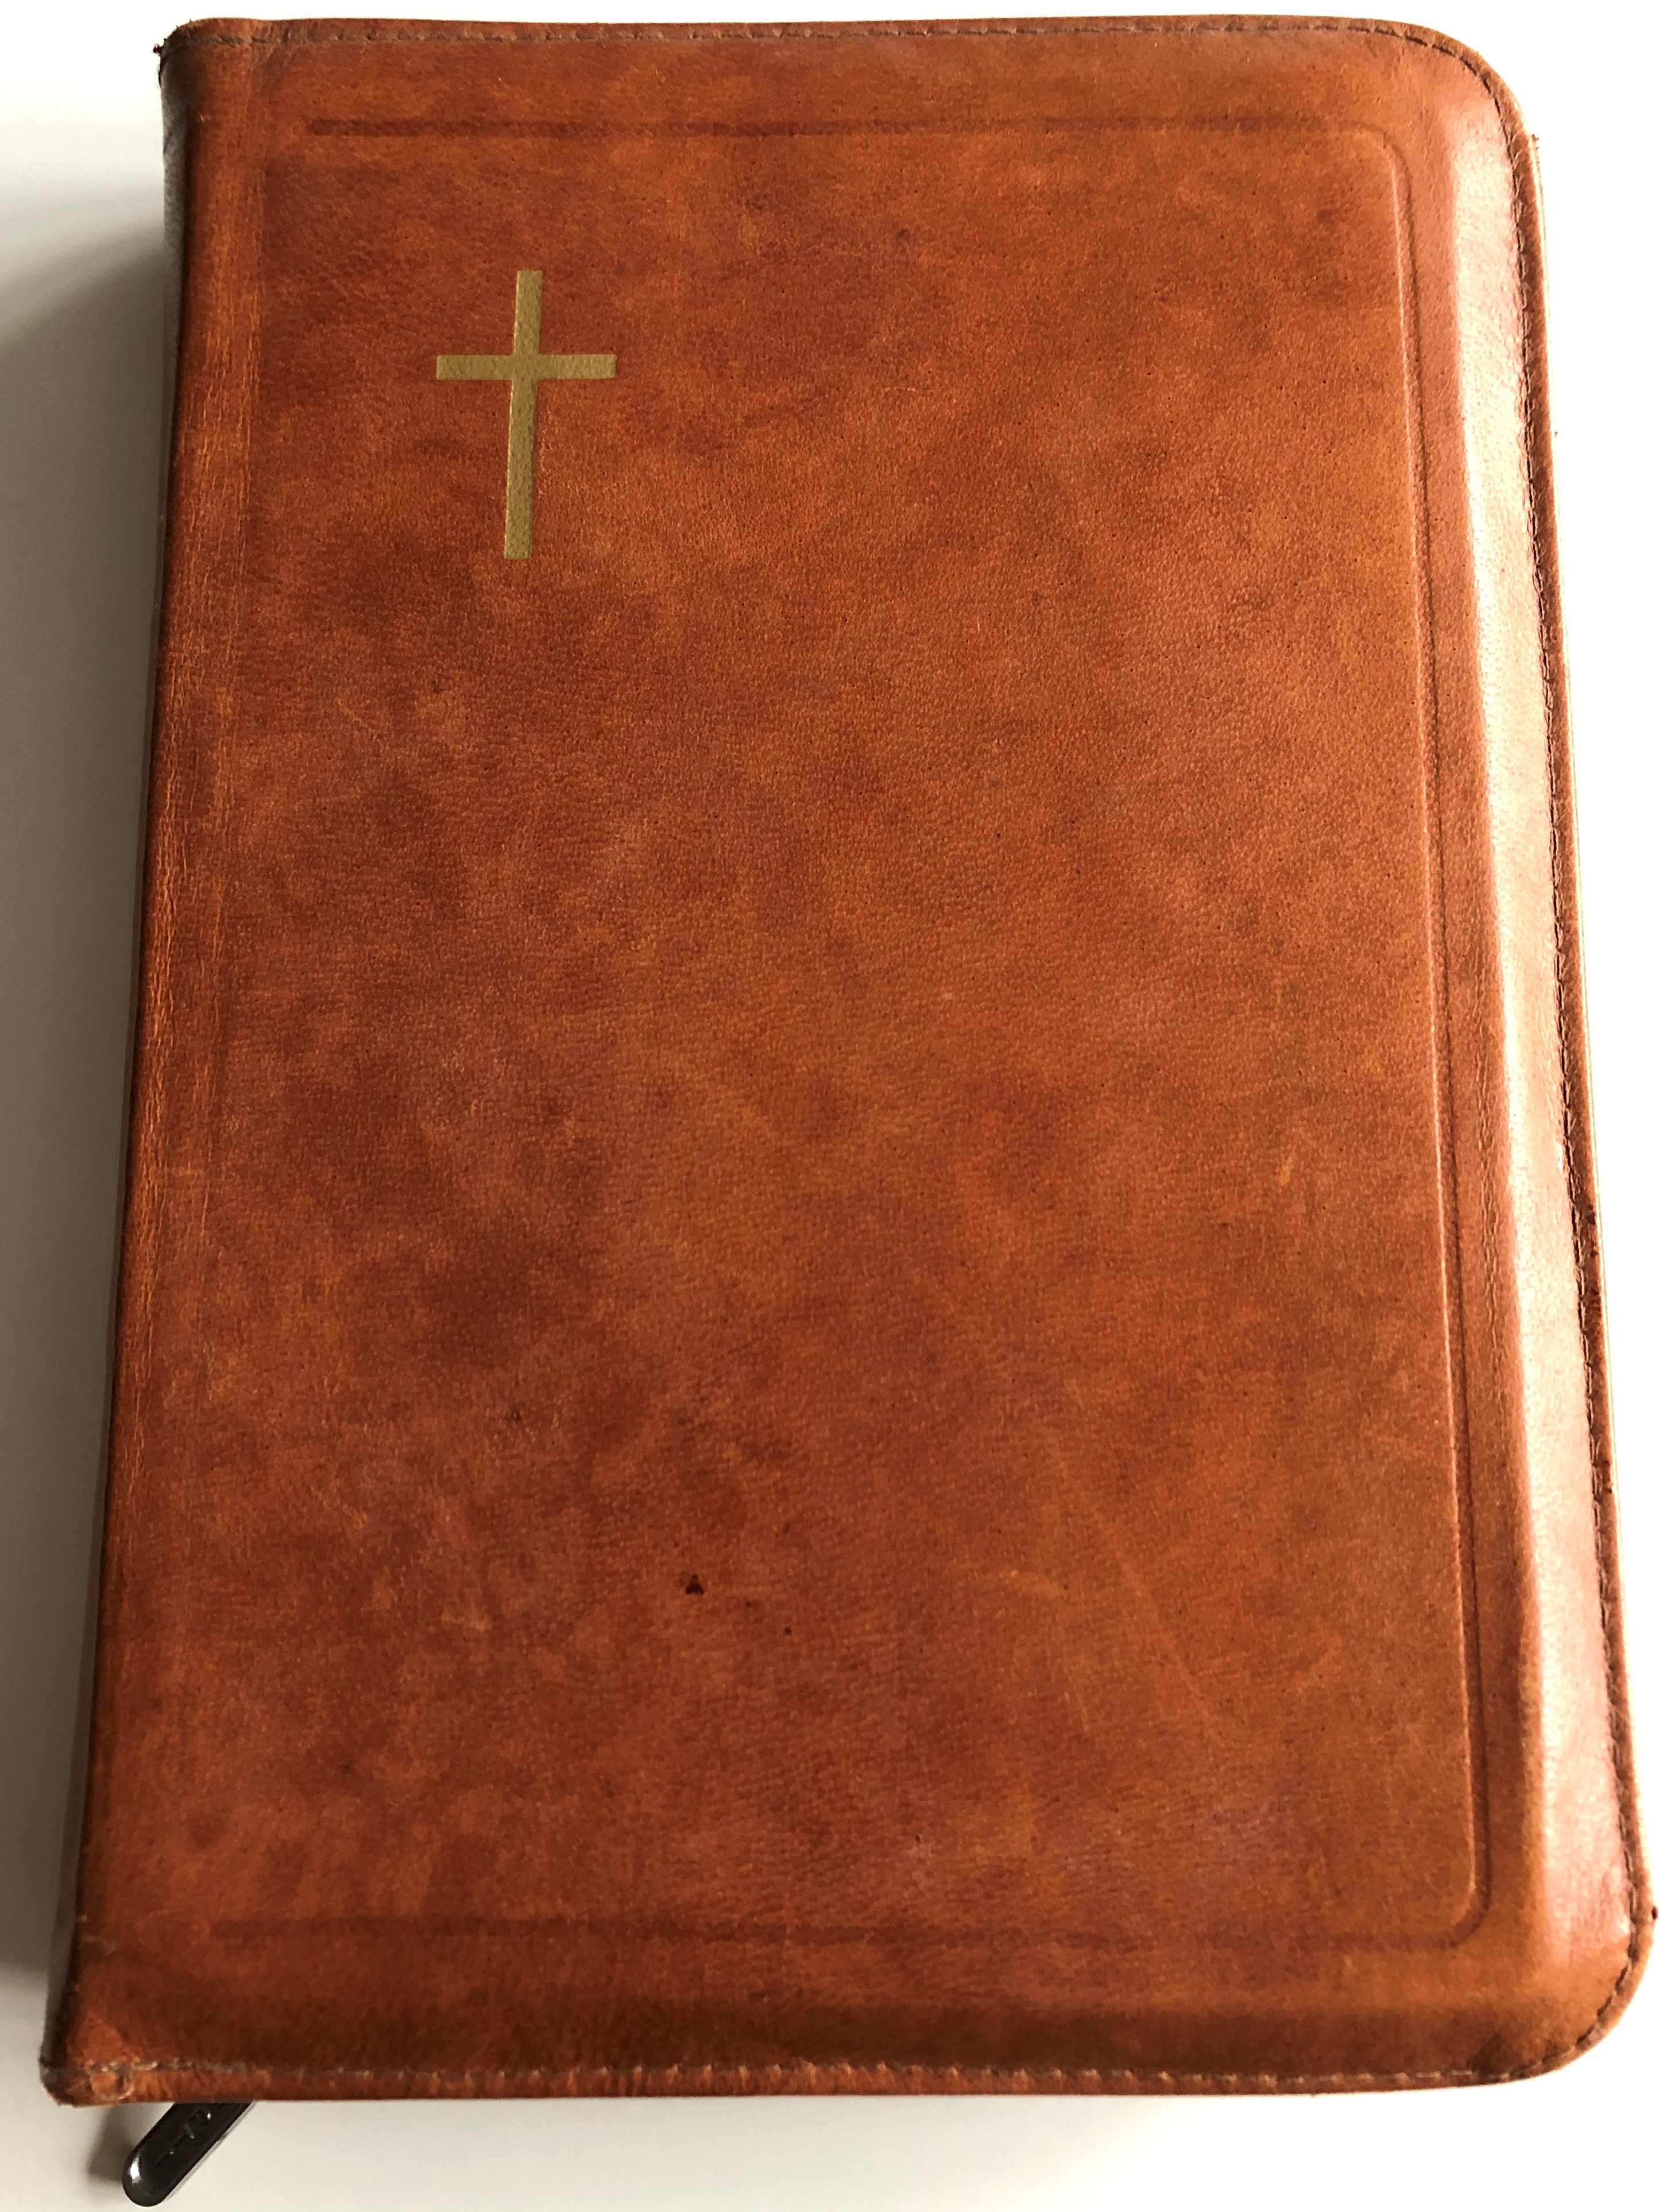 pyh-raamattu-finnish-language-brown-leather-bound-bible-1.jpg